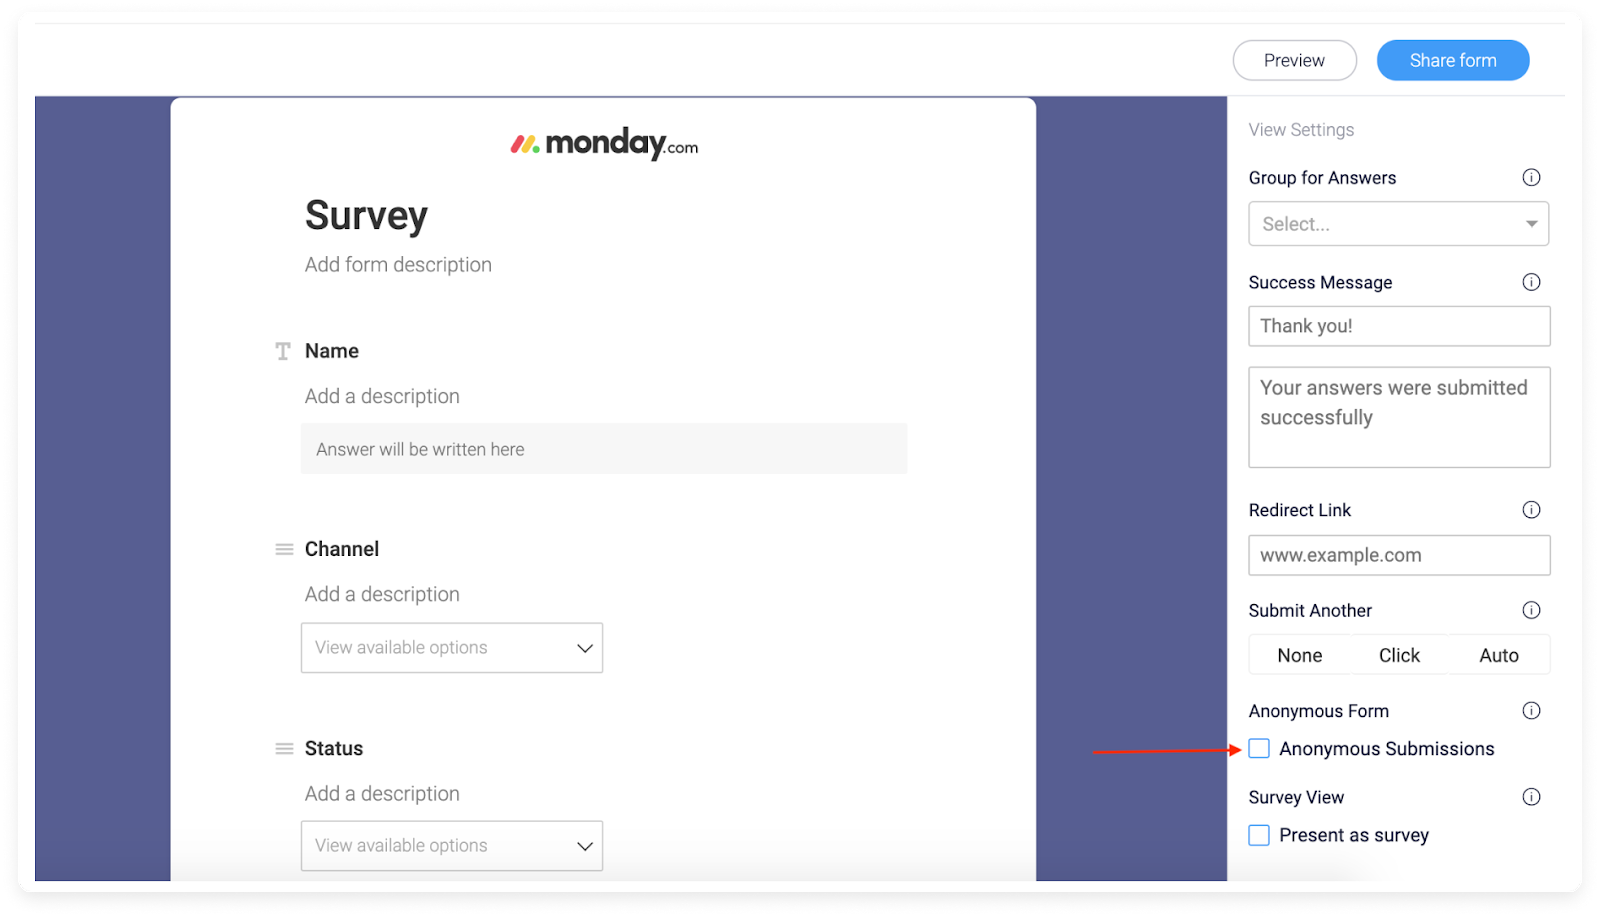 feedback forms on monday.com